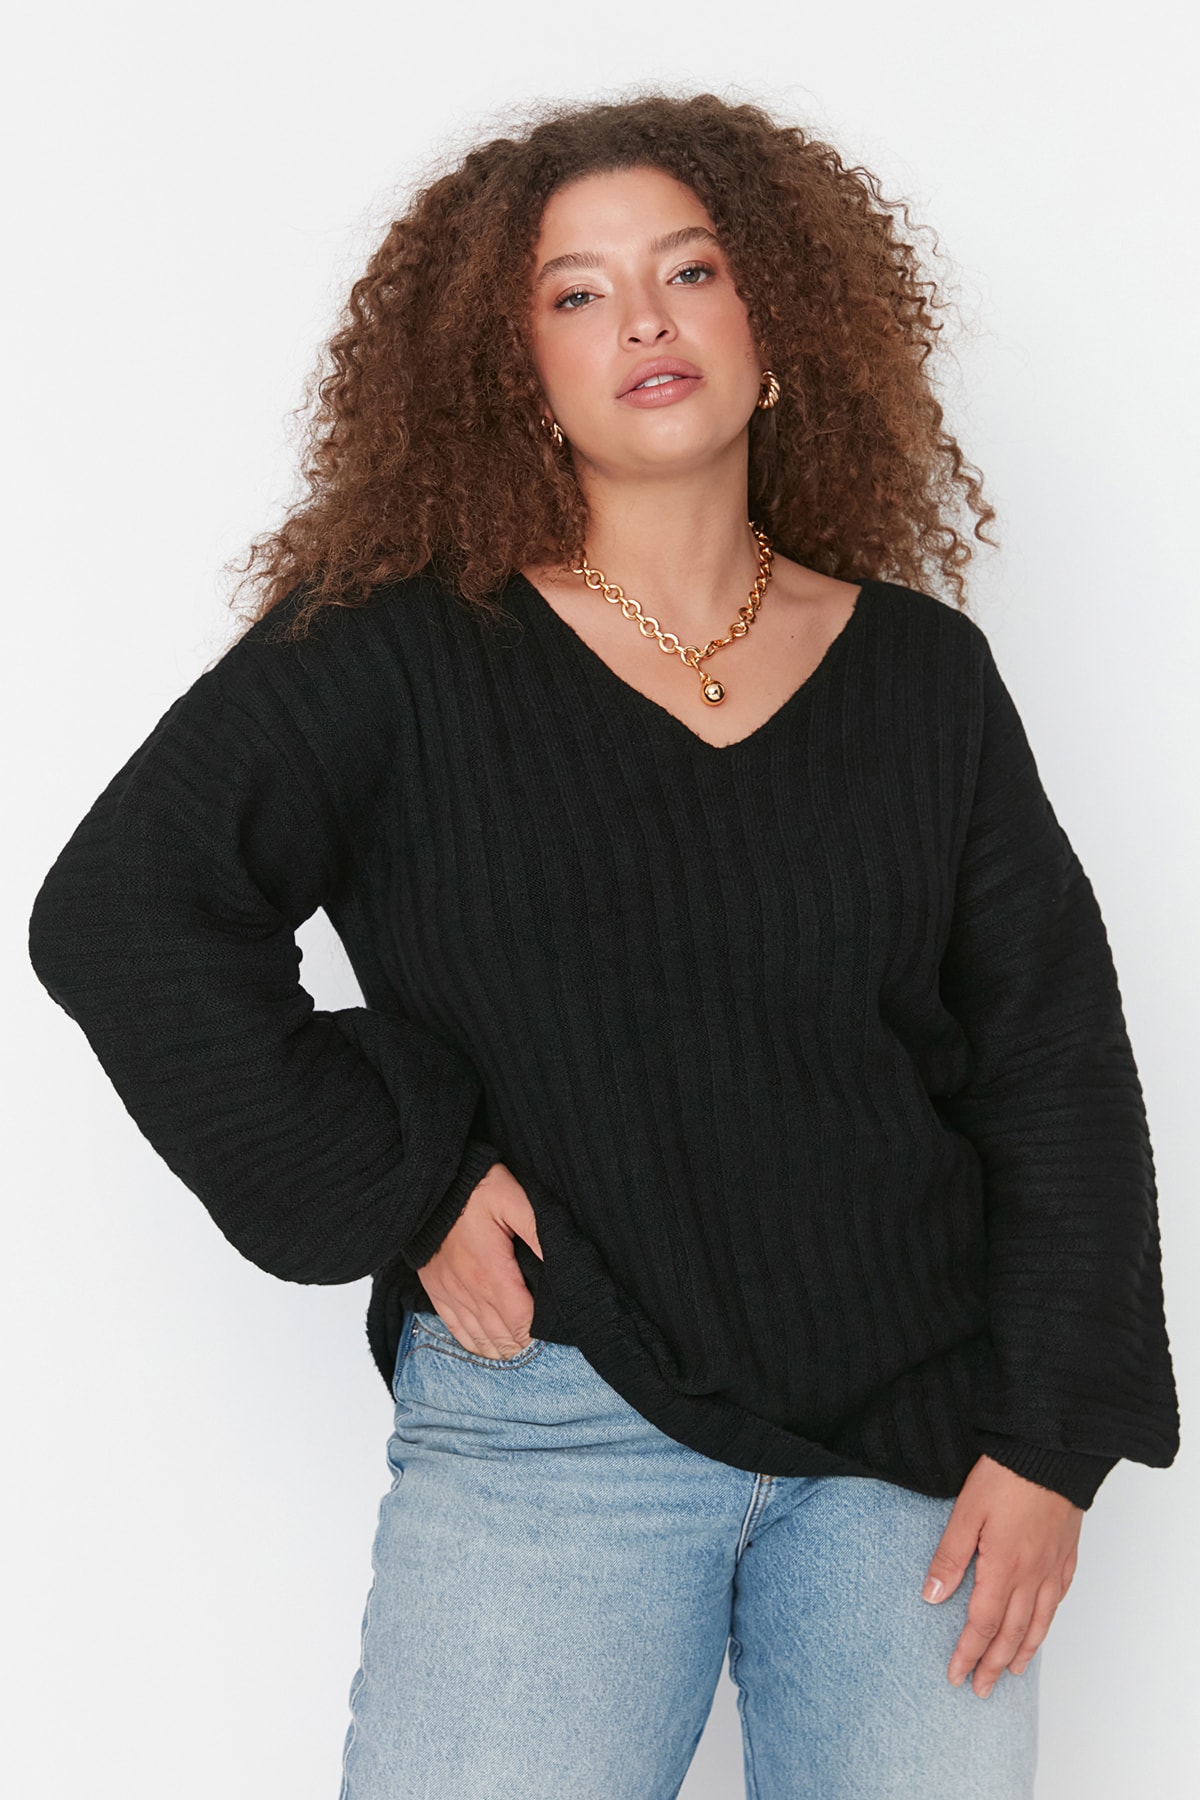 Trendyol Plus Size Black Lace Detailed V-Neck Knitwear Sweater